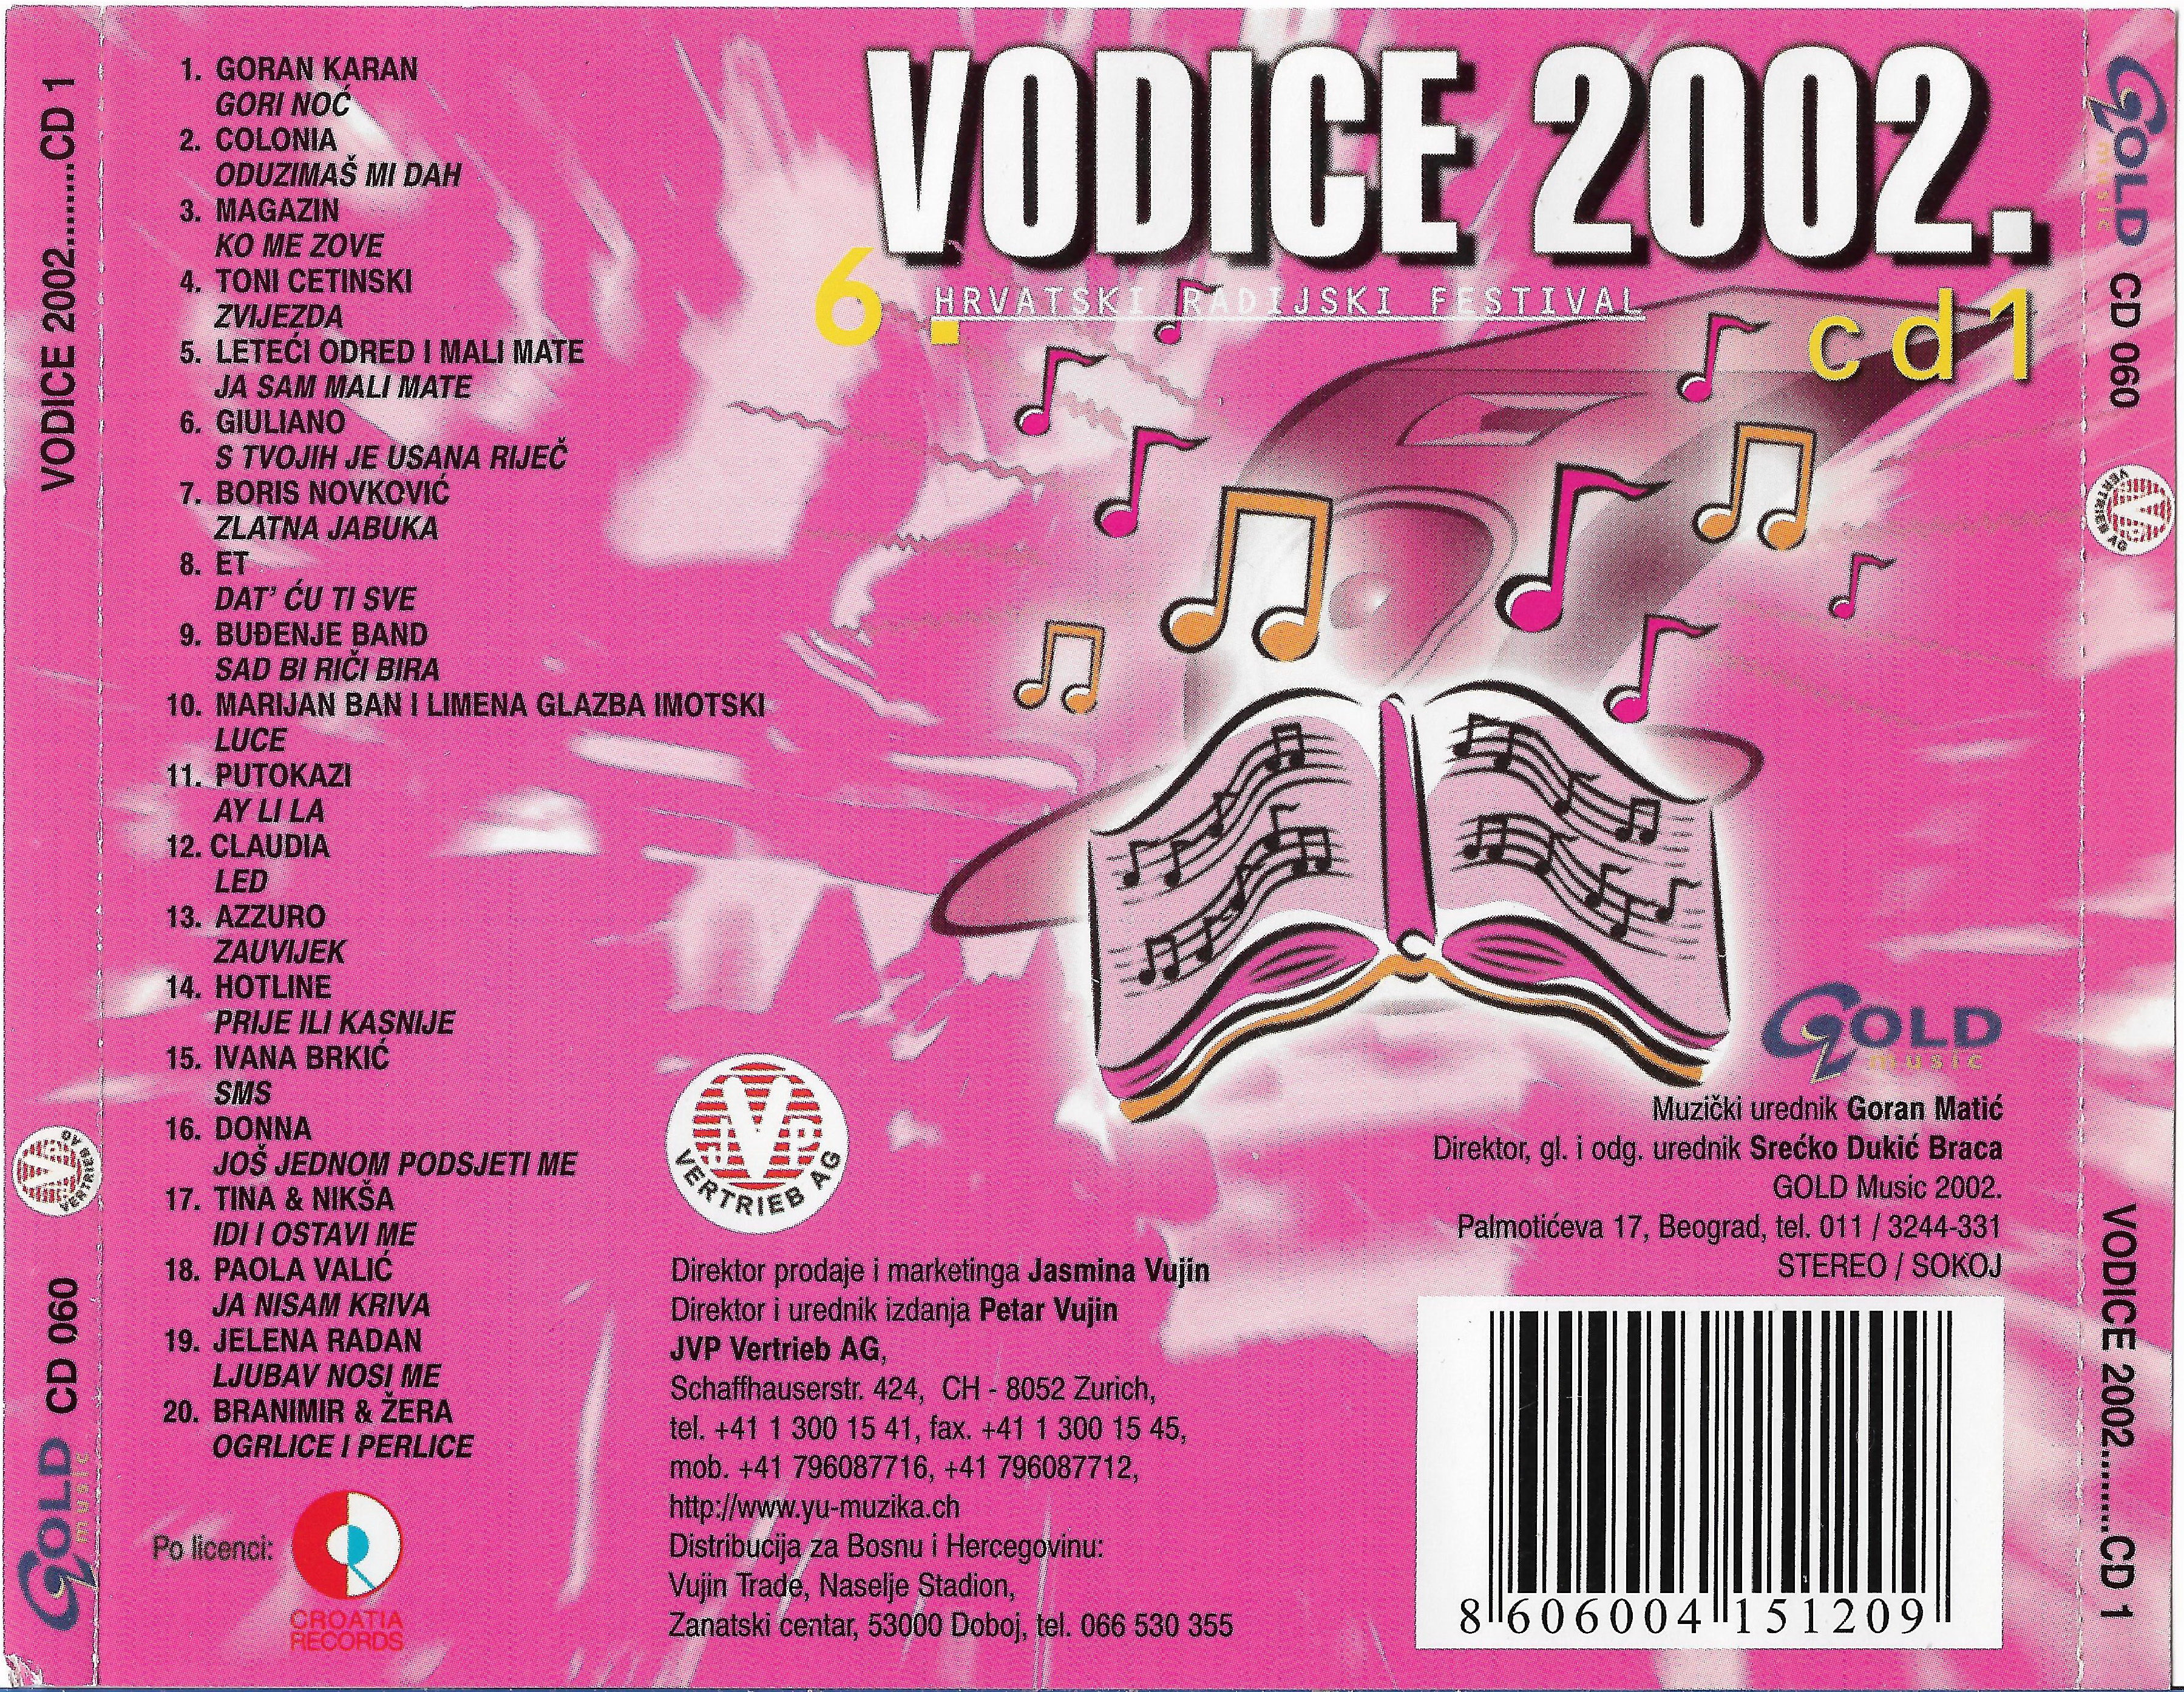 Vodice 2002 CD 1 3